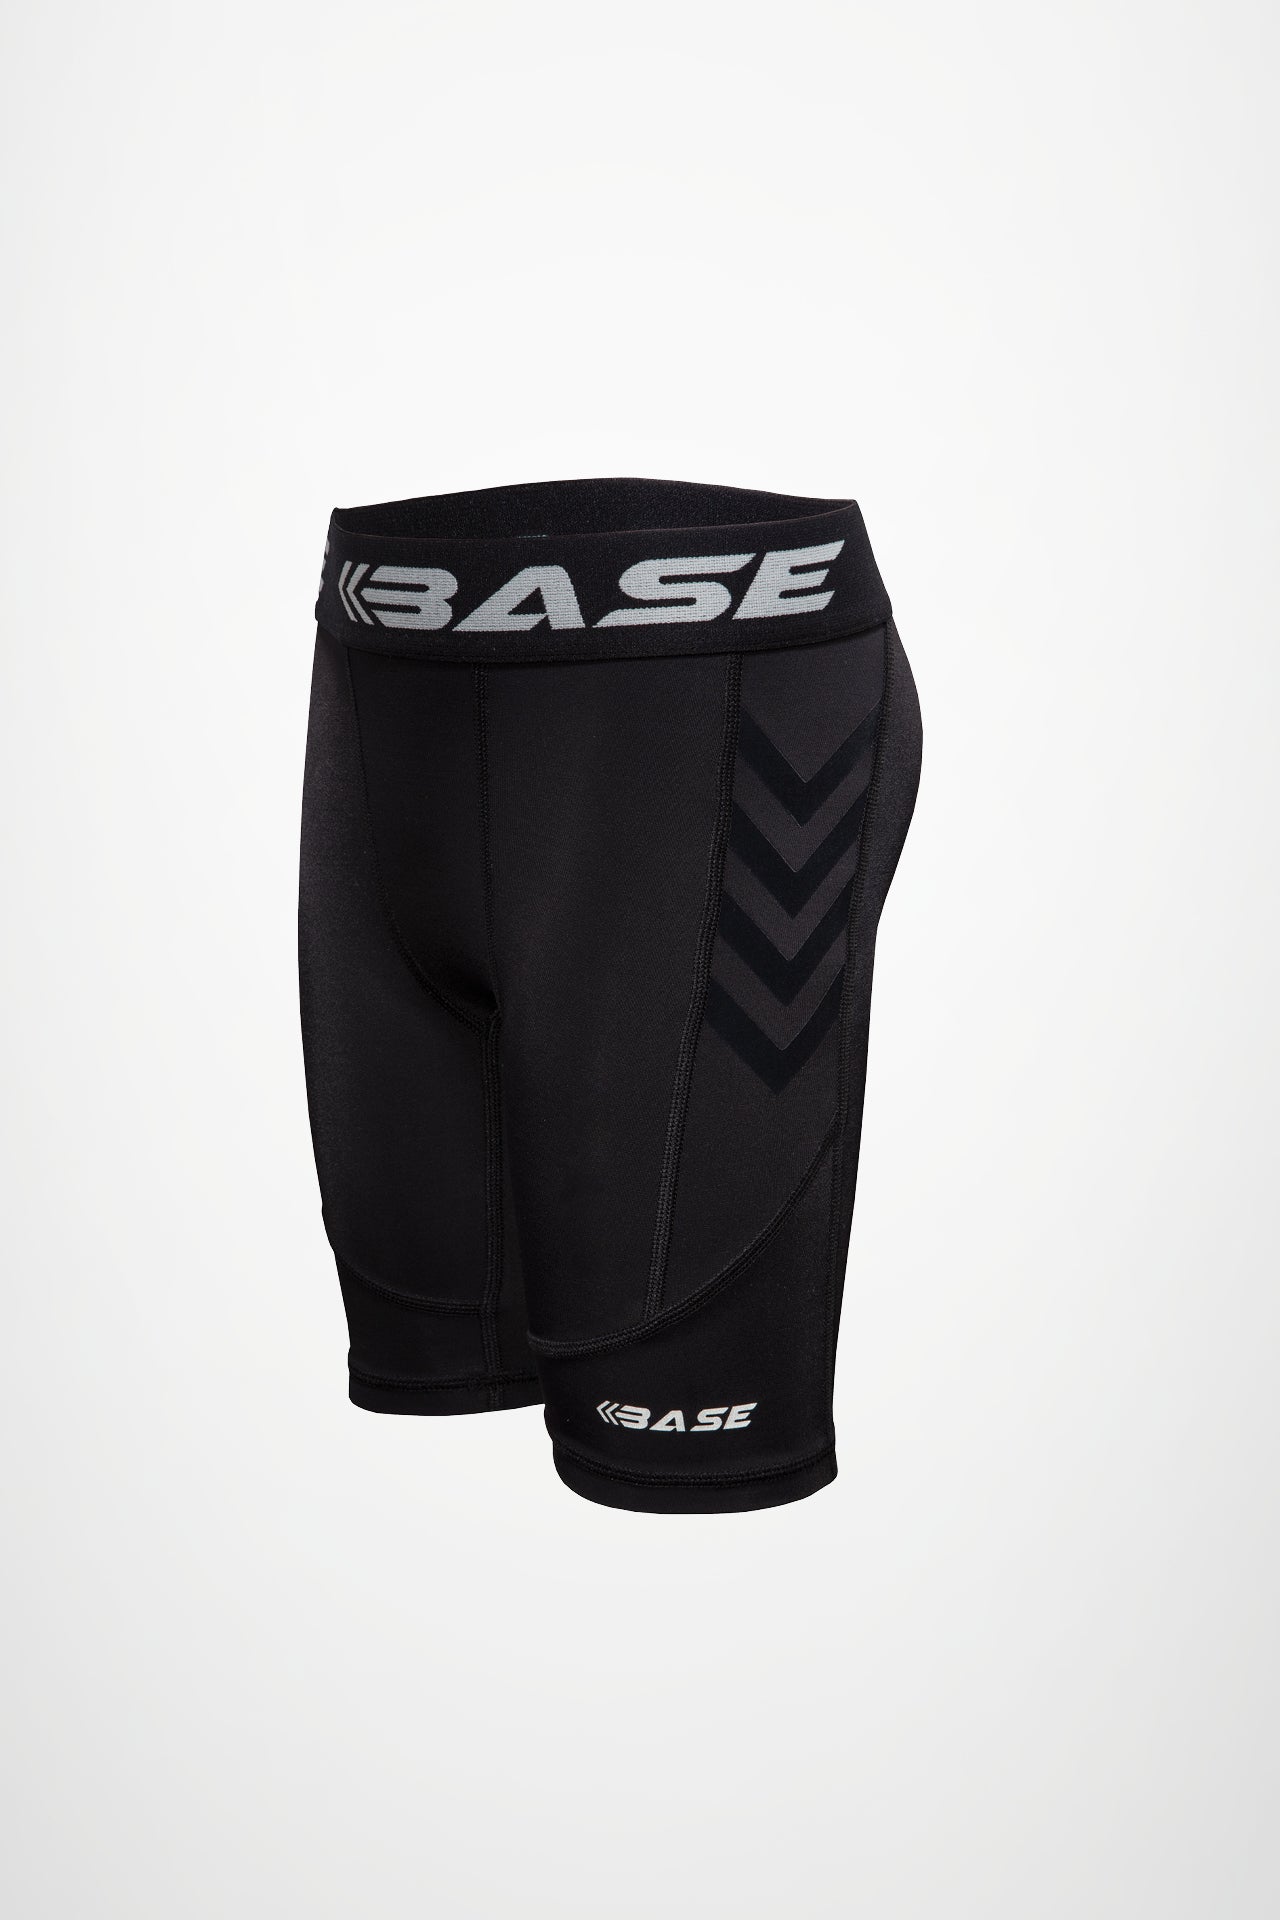 BASE Youth Compression Shorts – Melbourne United Official Merchandise Shop